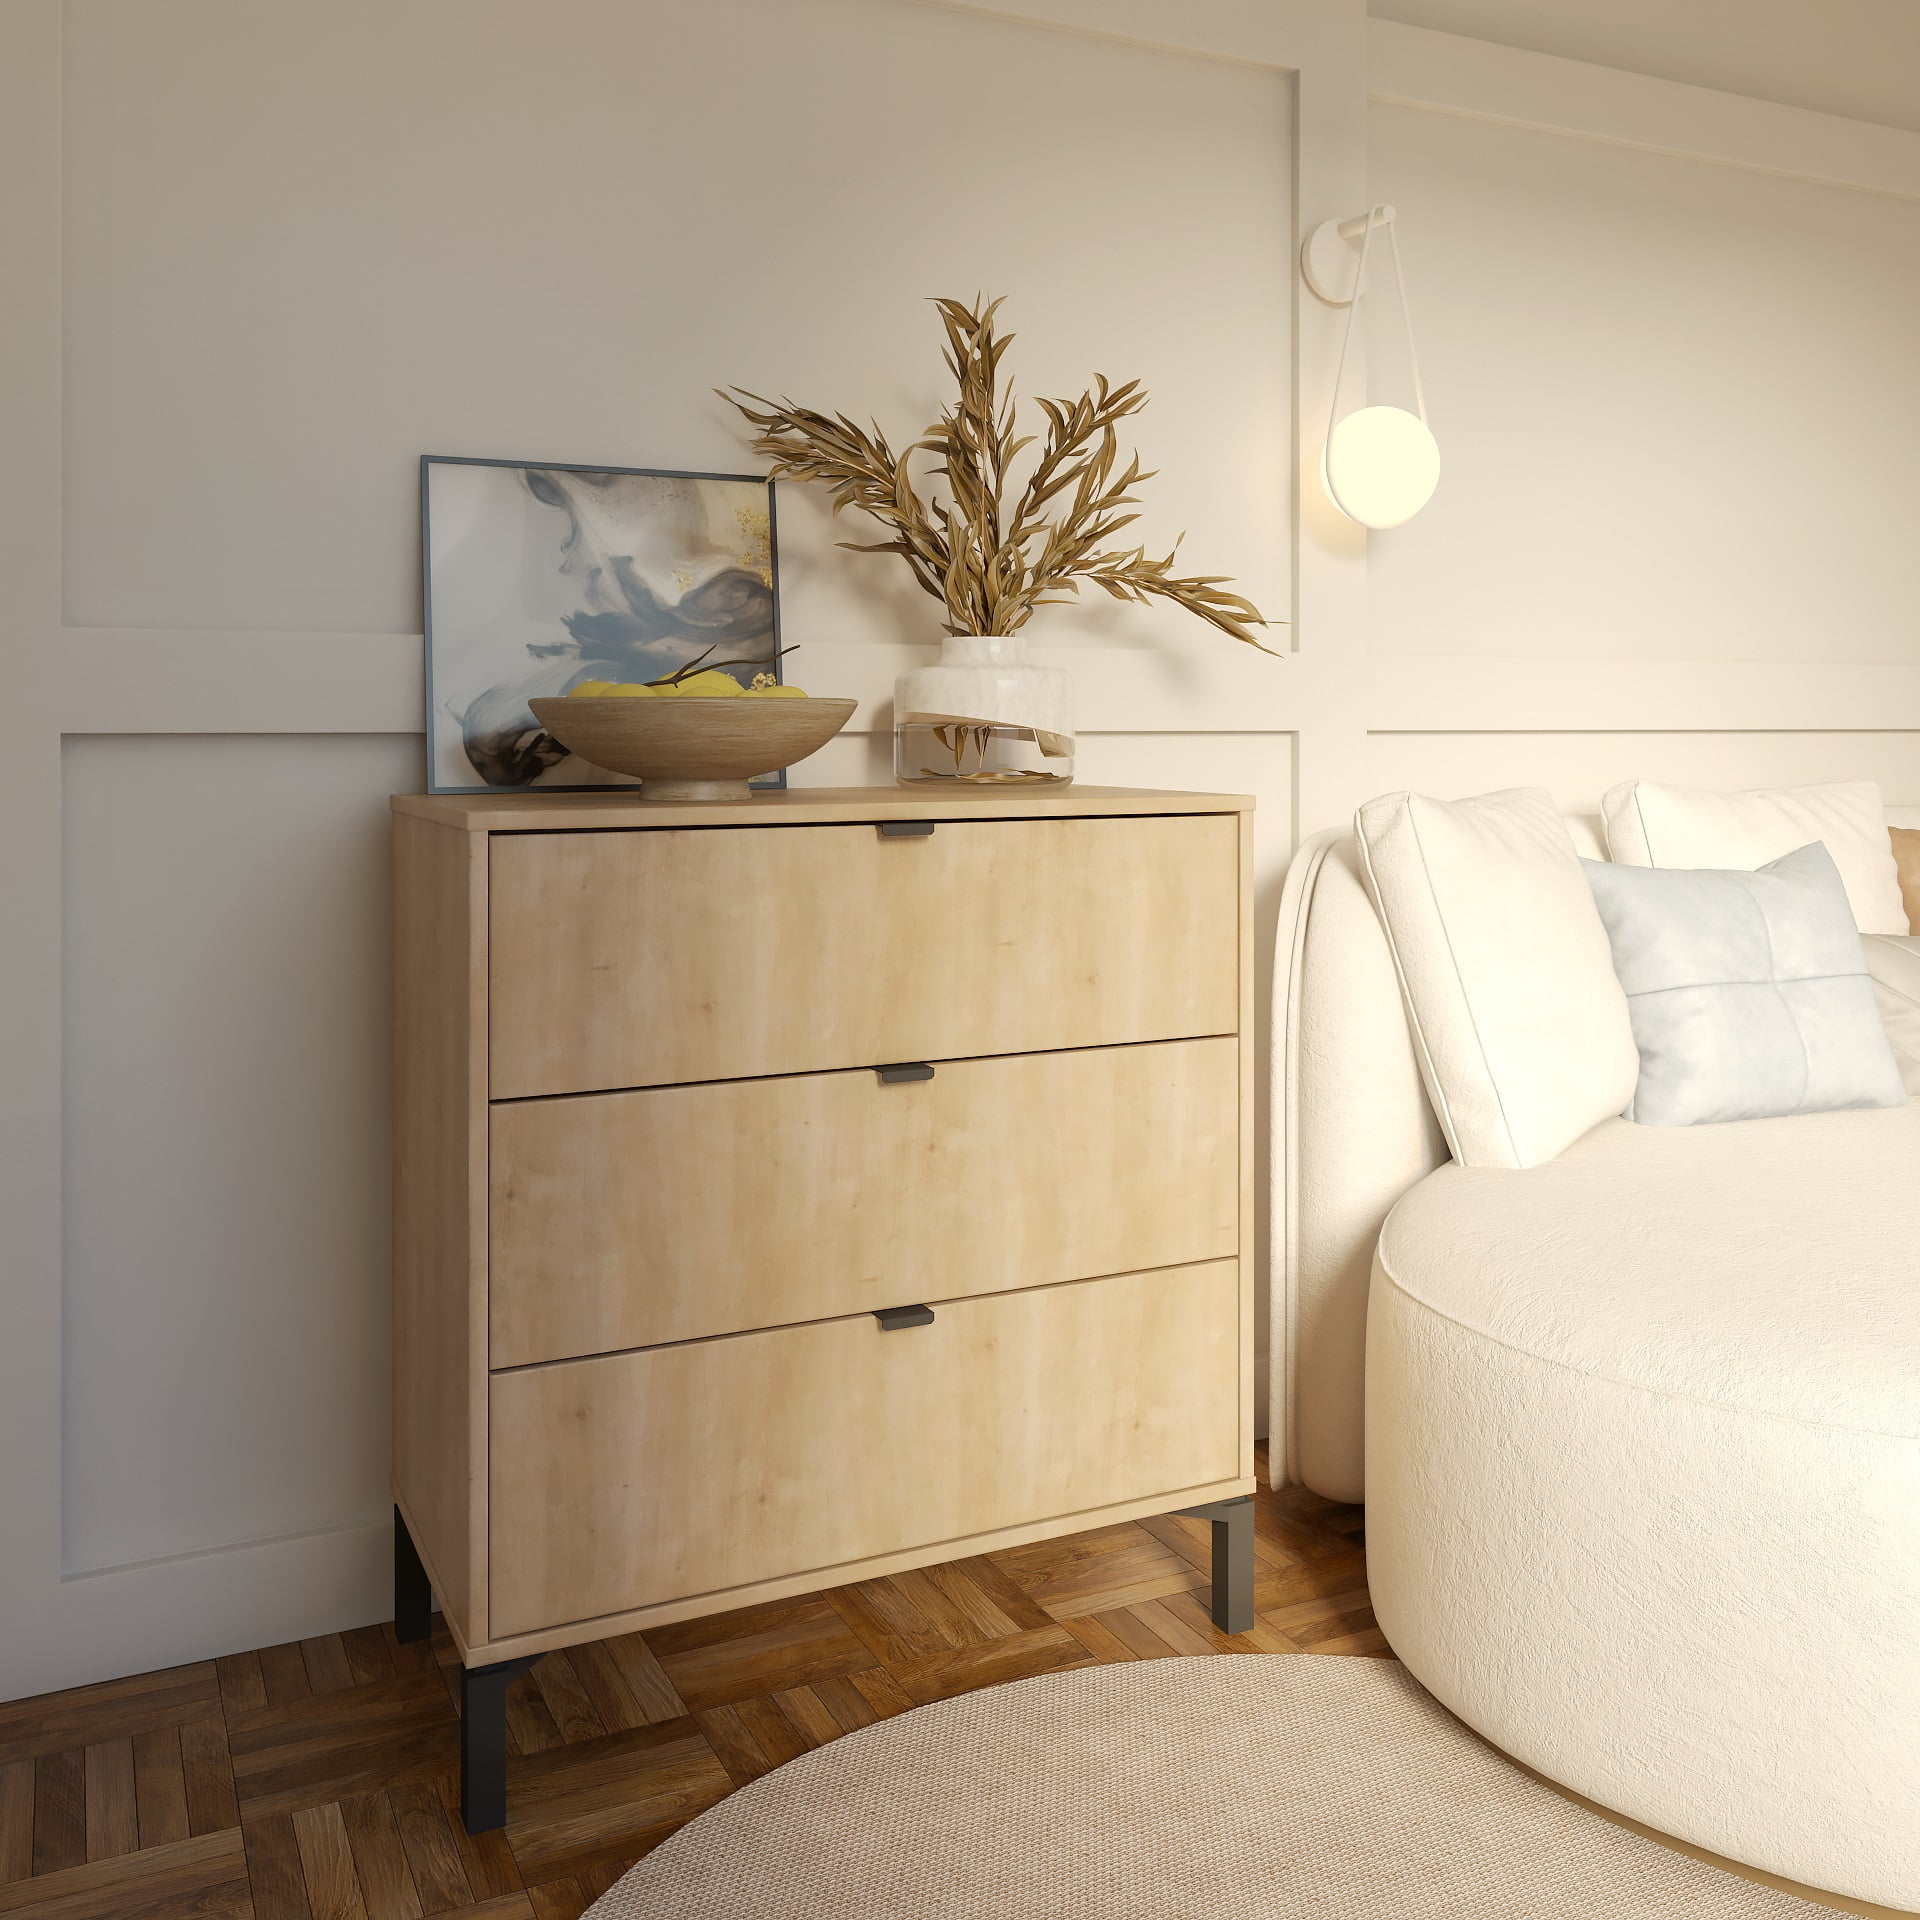 Falkk Furniture – Minimalist 4-Drawer 1-Door Dresser – Sustainable Reforestation Wood Organizer – Black, White, or Natural Wood – Versatile Home